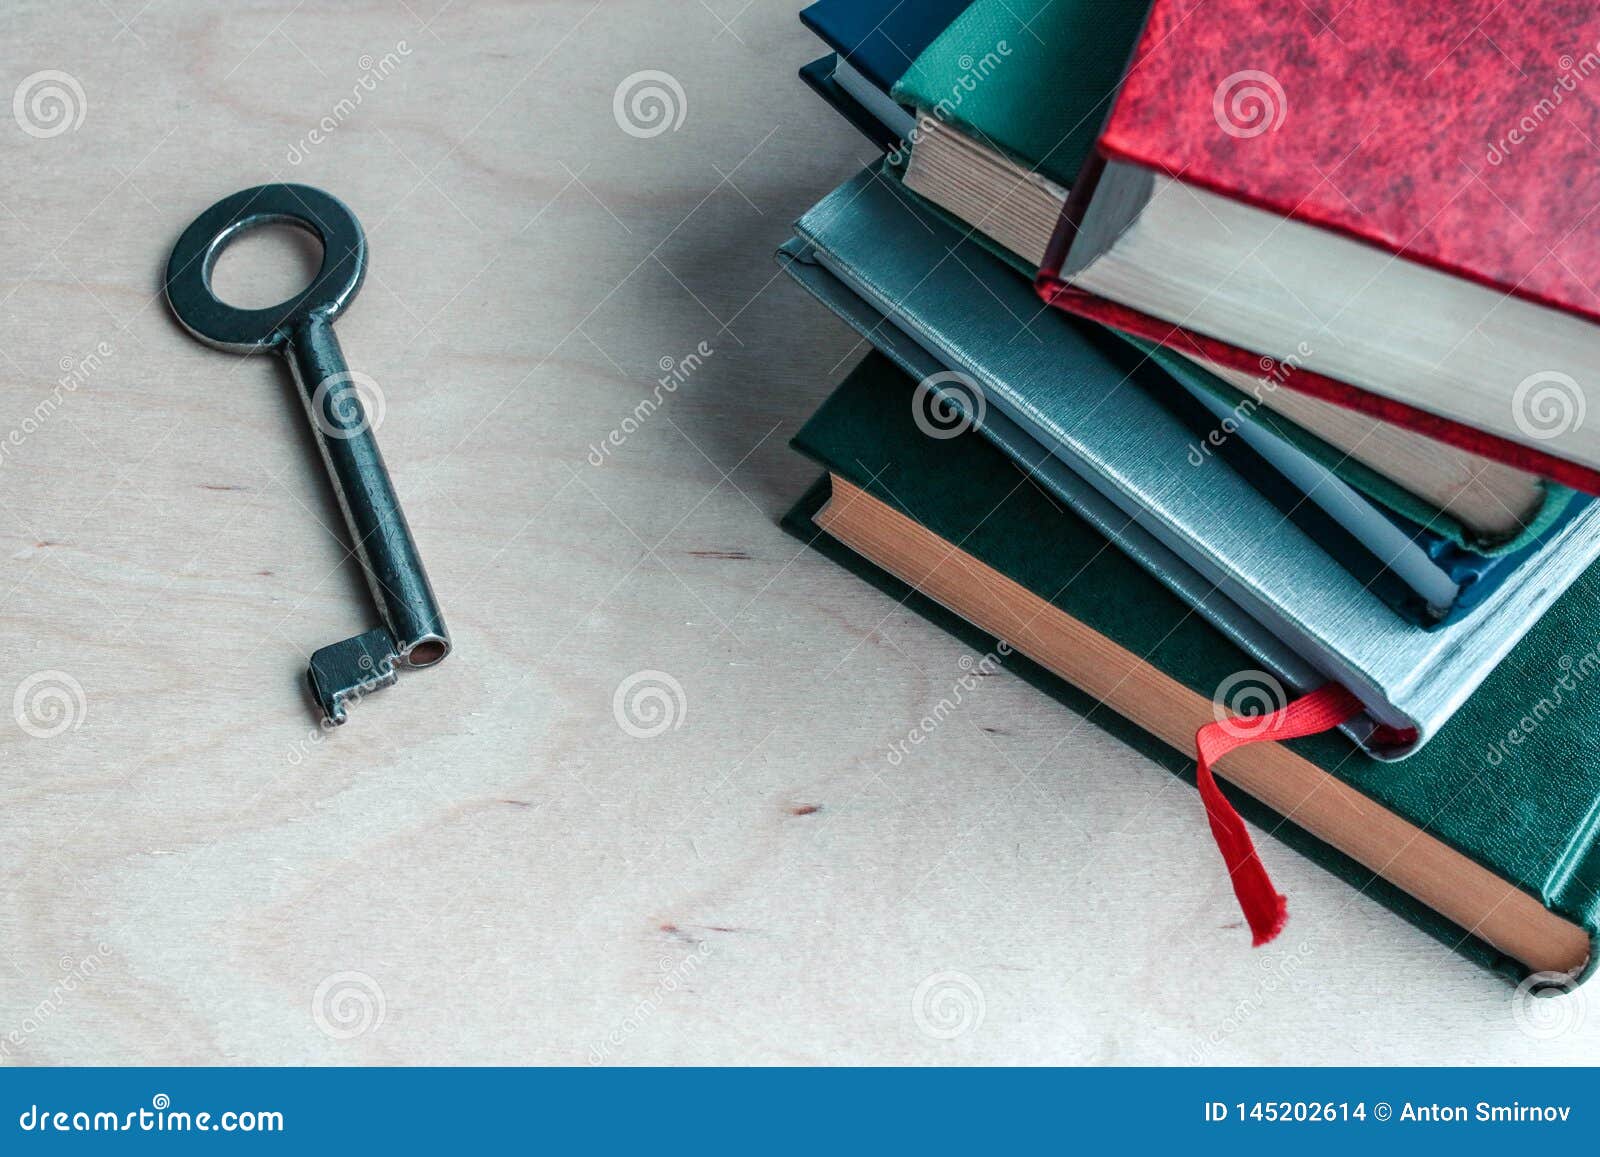 Wpisuje i sterta ksi??ki na drewnianym tle Metafora - klucz wiedza. Book reading concept is a key to success, book stack and key on vintage wooden table background. Key to knowledge